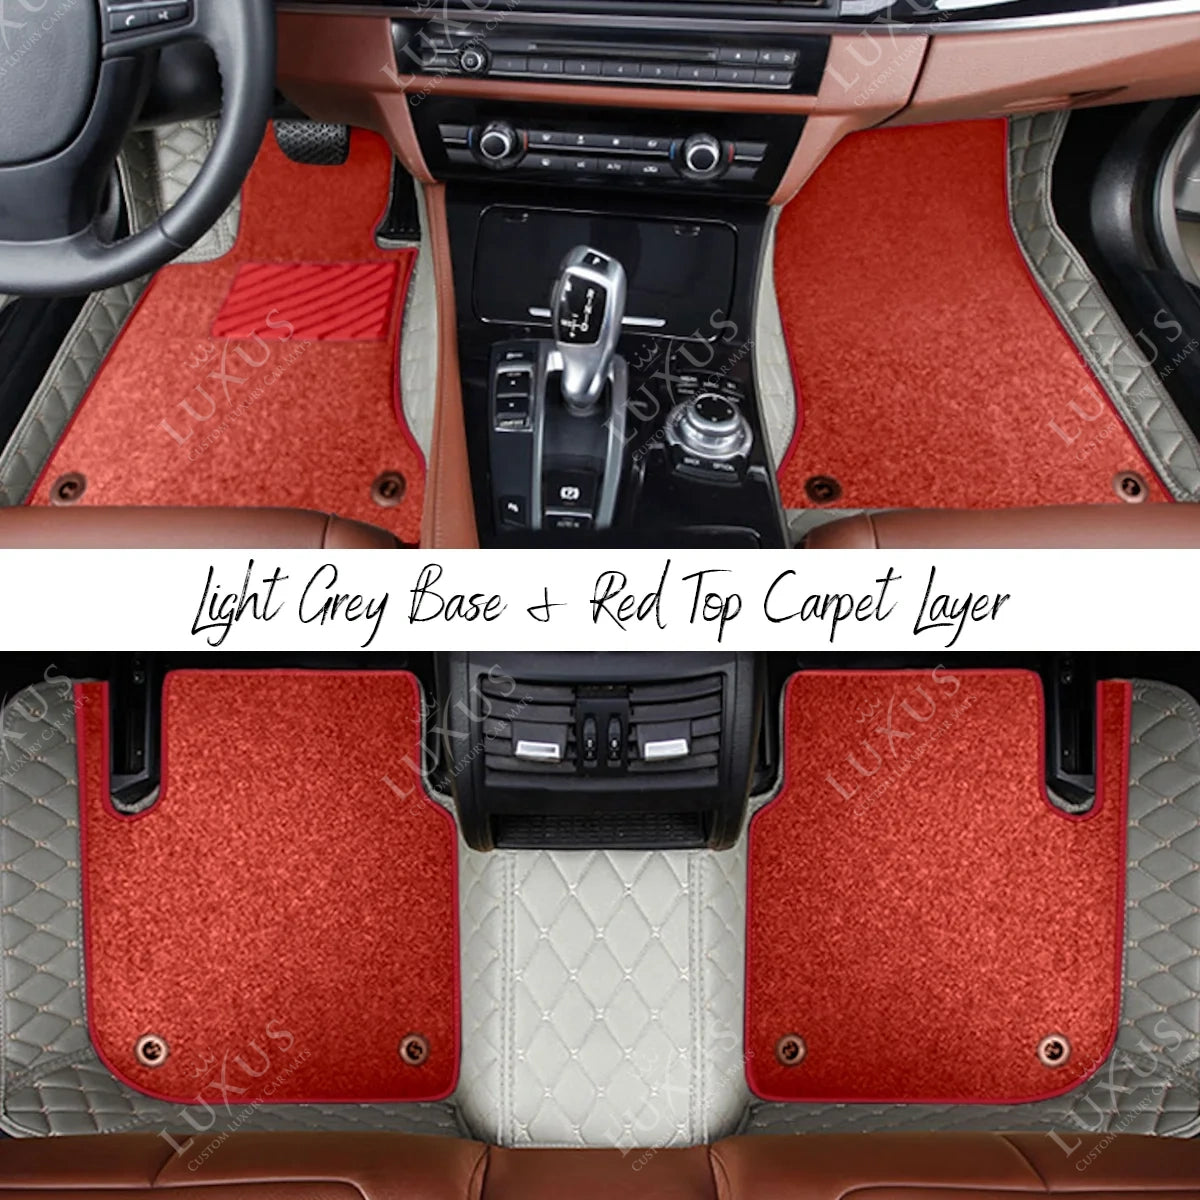 Light Grey Diamond Base & Red Top Carpet Double Layer Luxury Car Mats Set